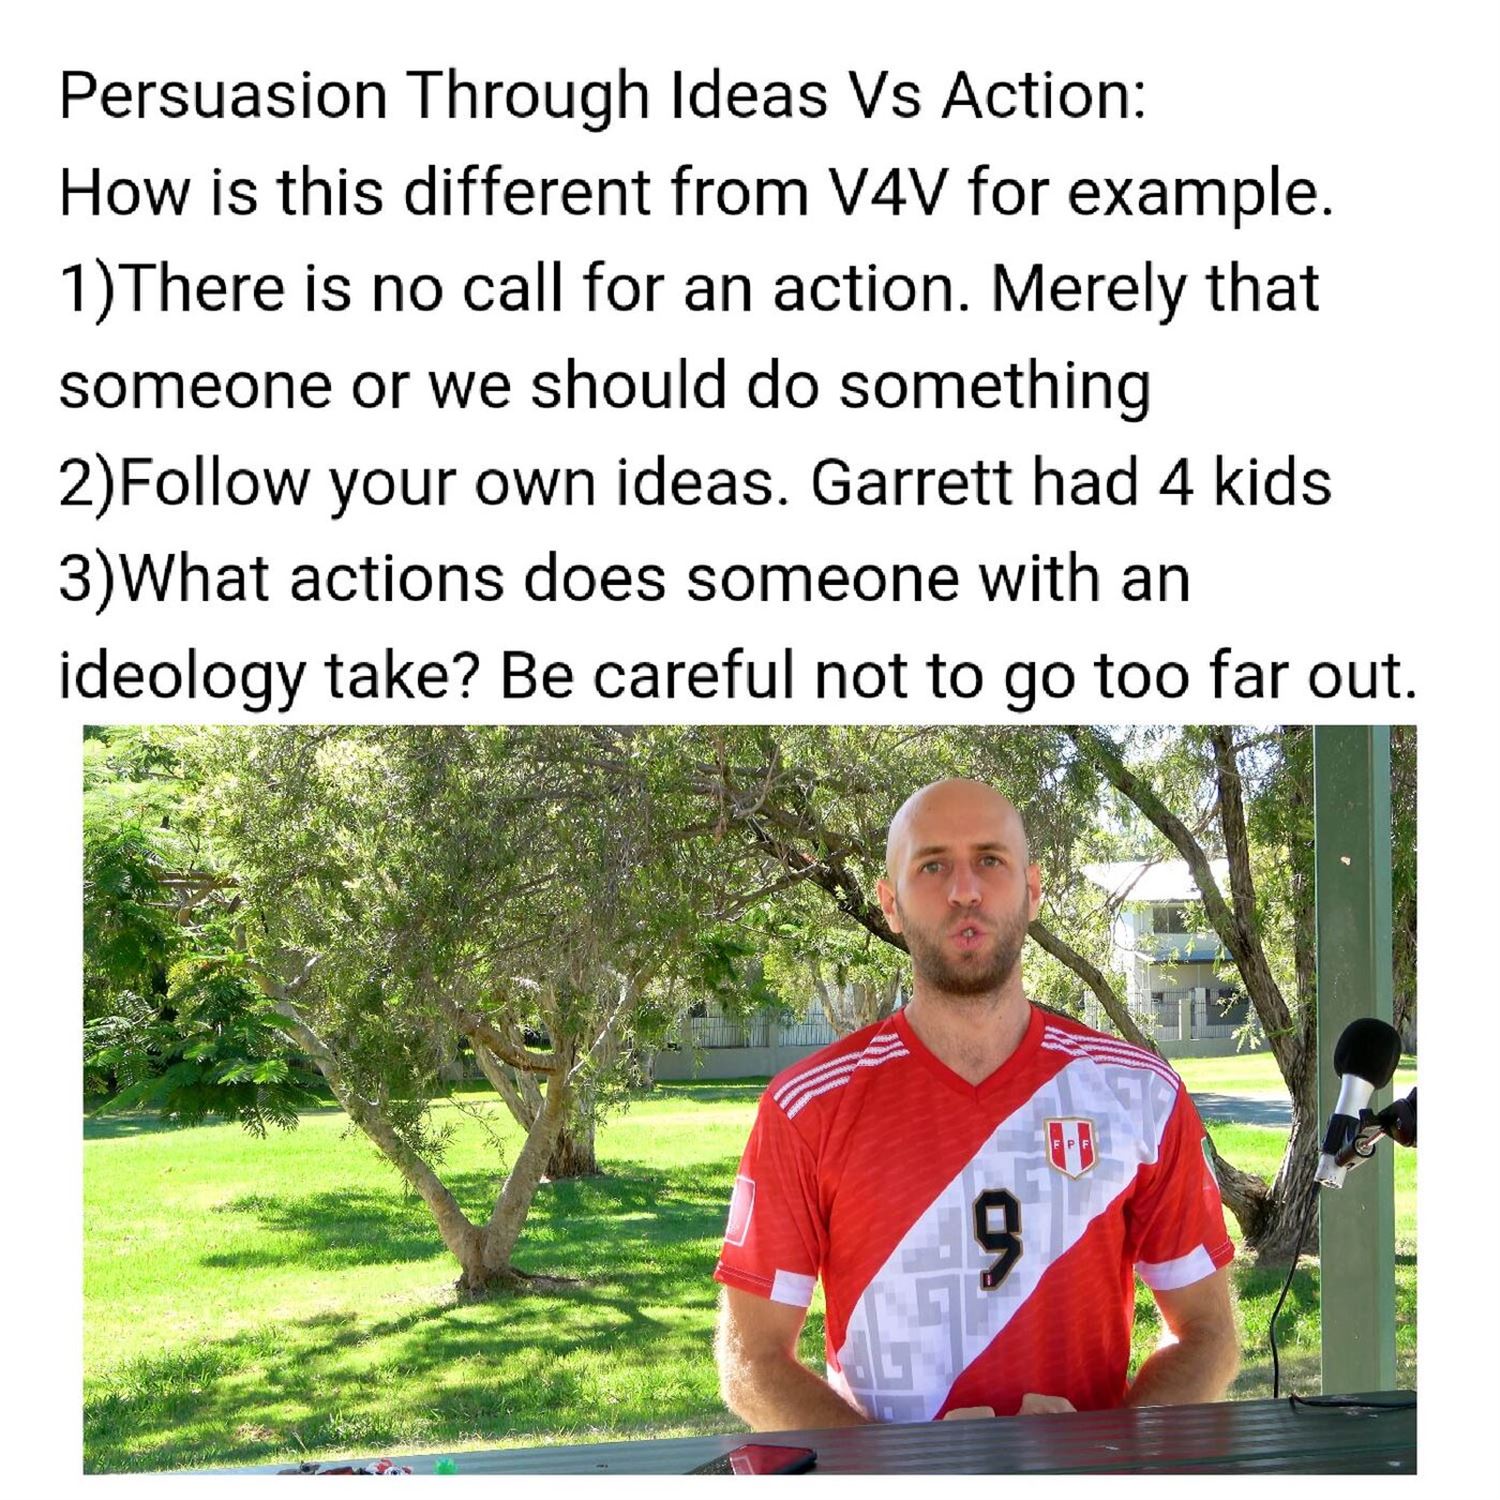 Ideas vs actions